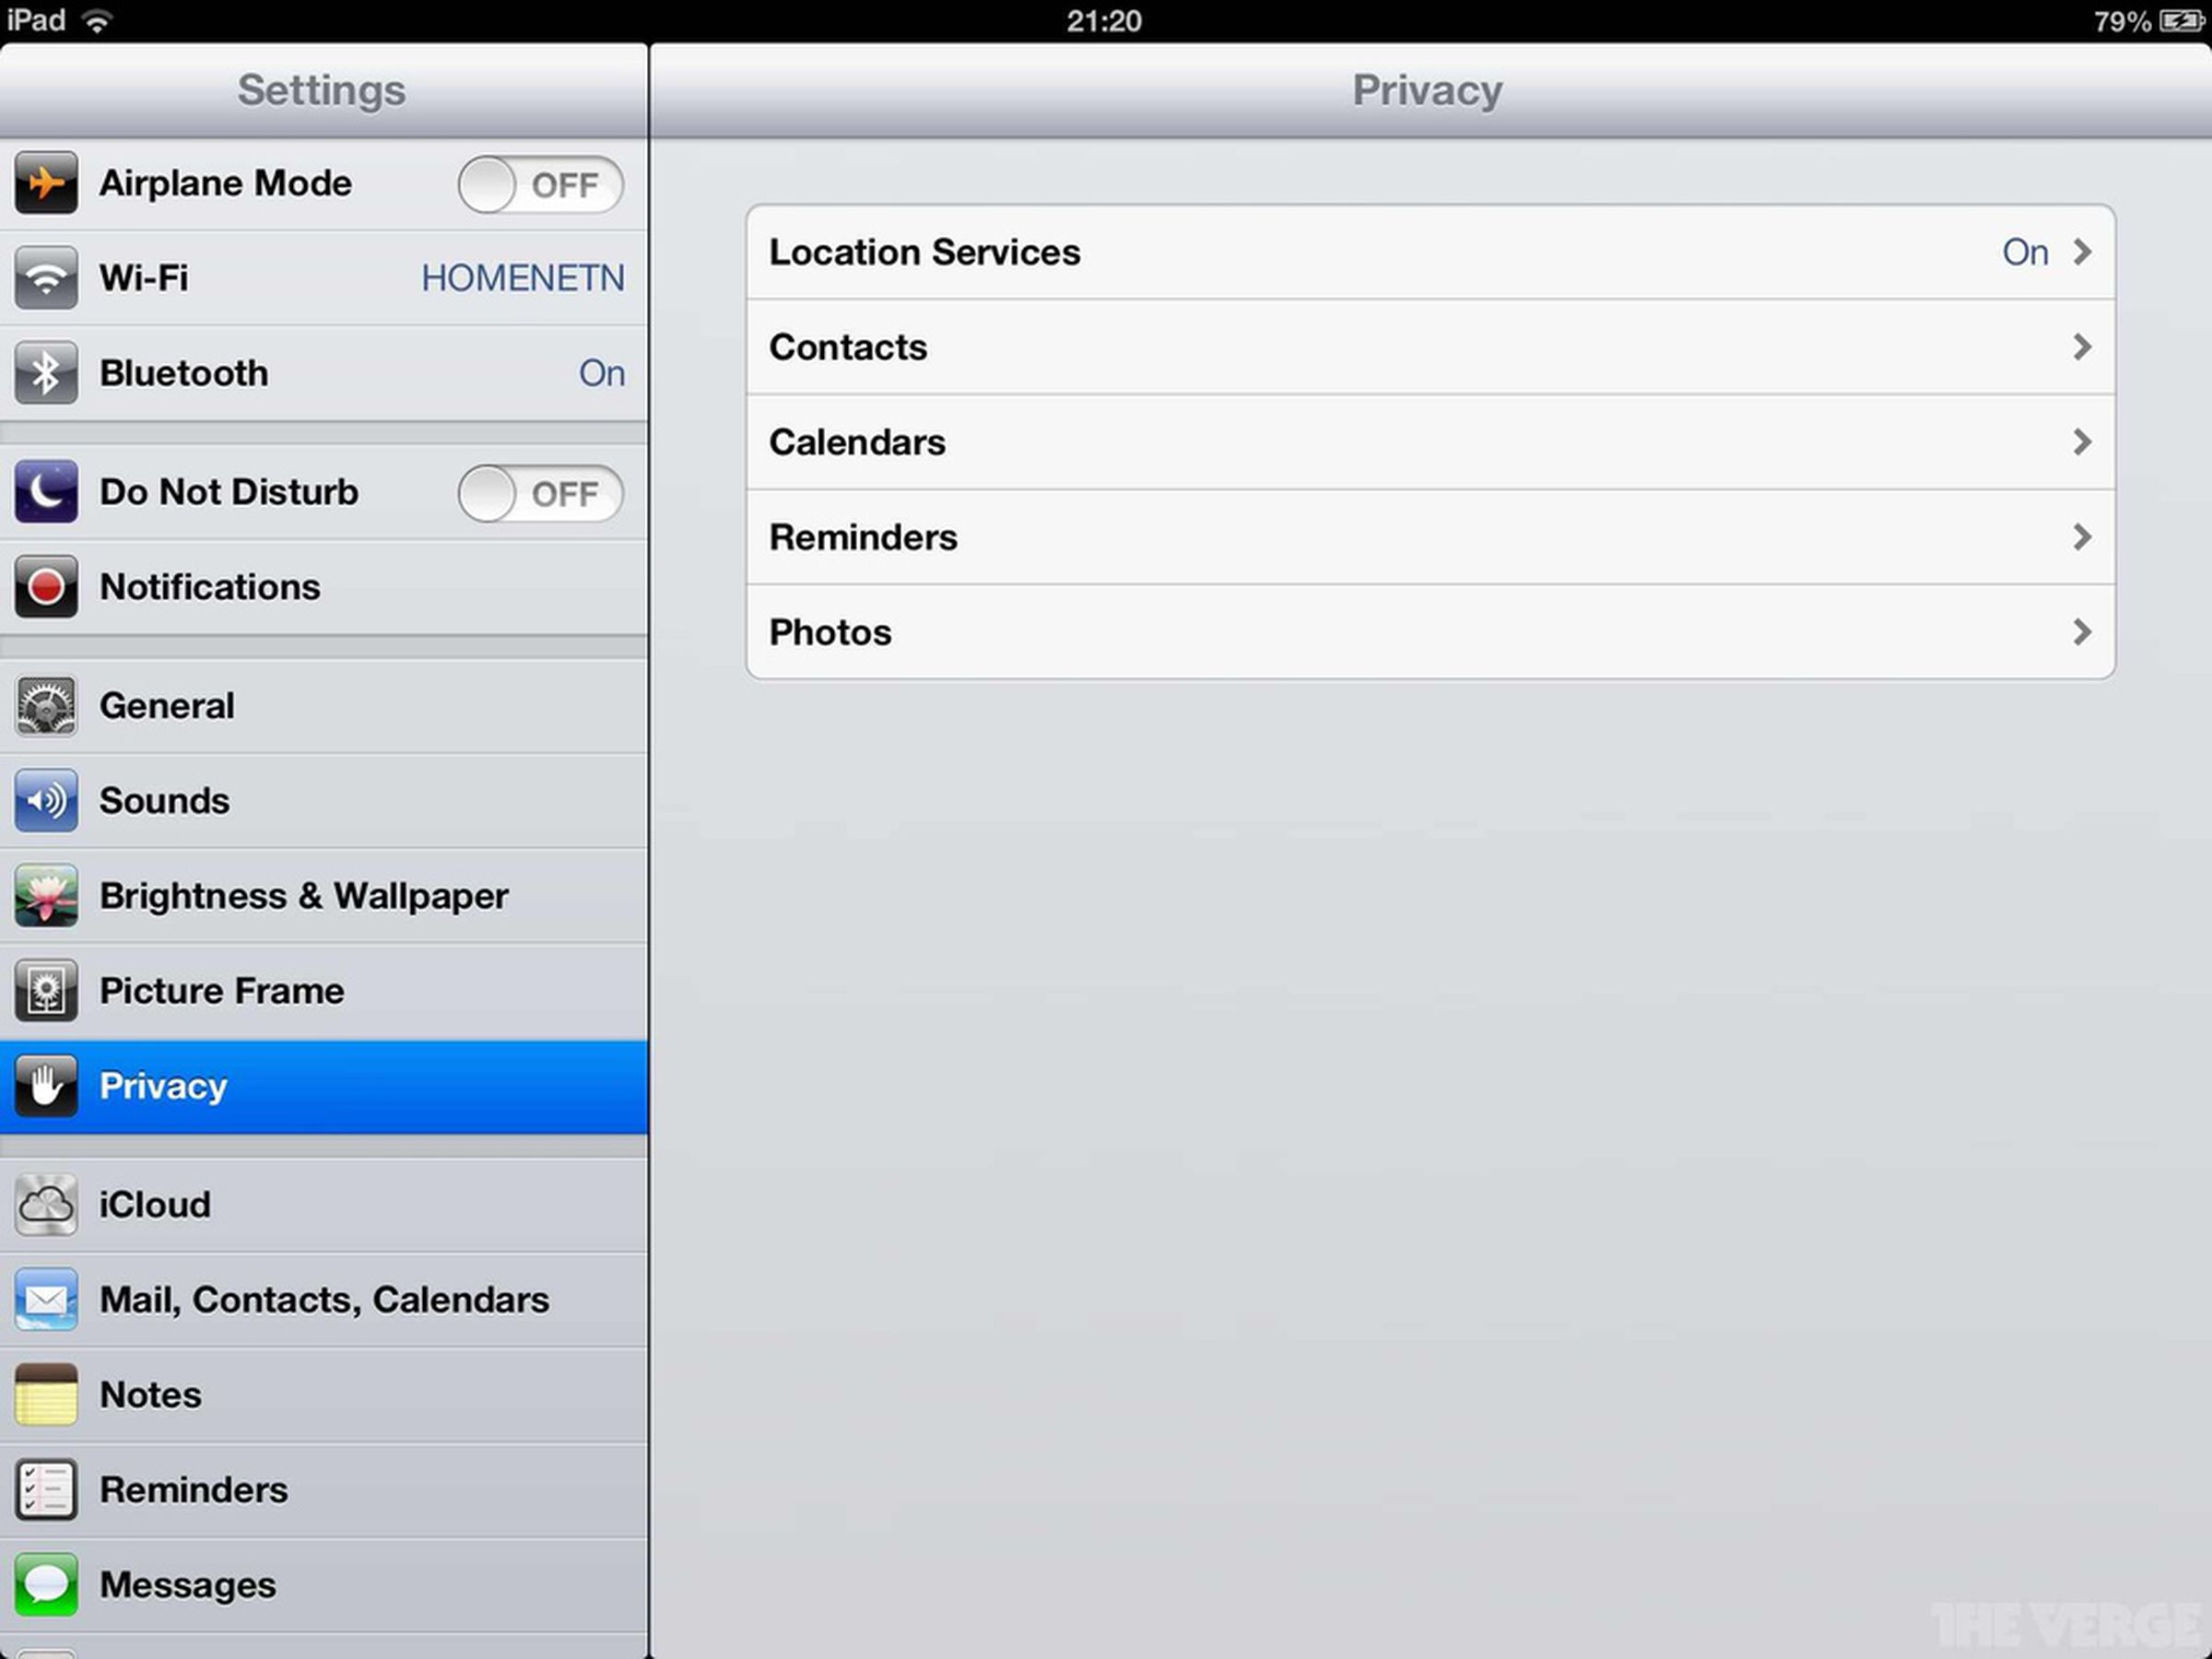 iOS 6 developer beta screenshots (iPad)